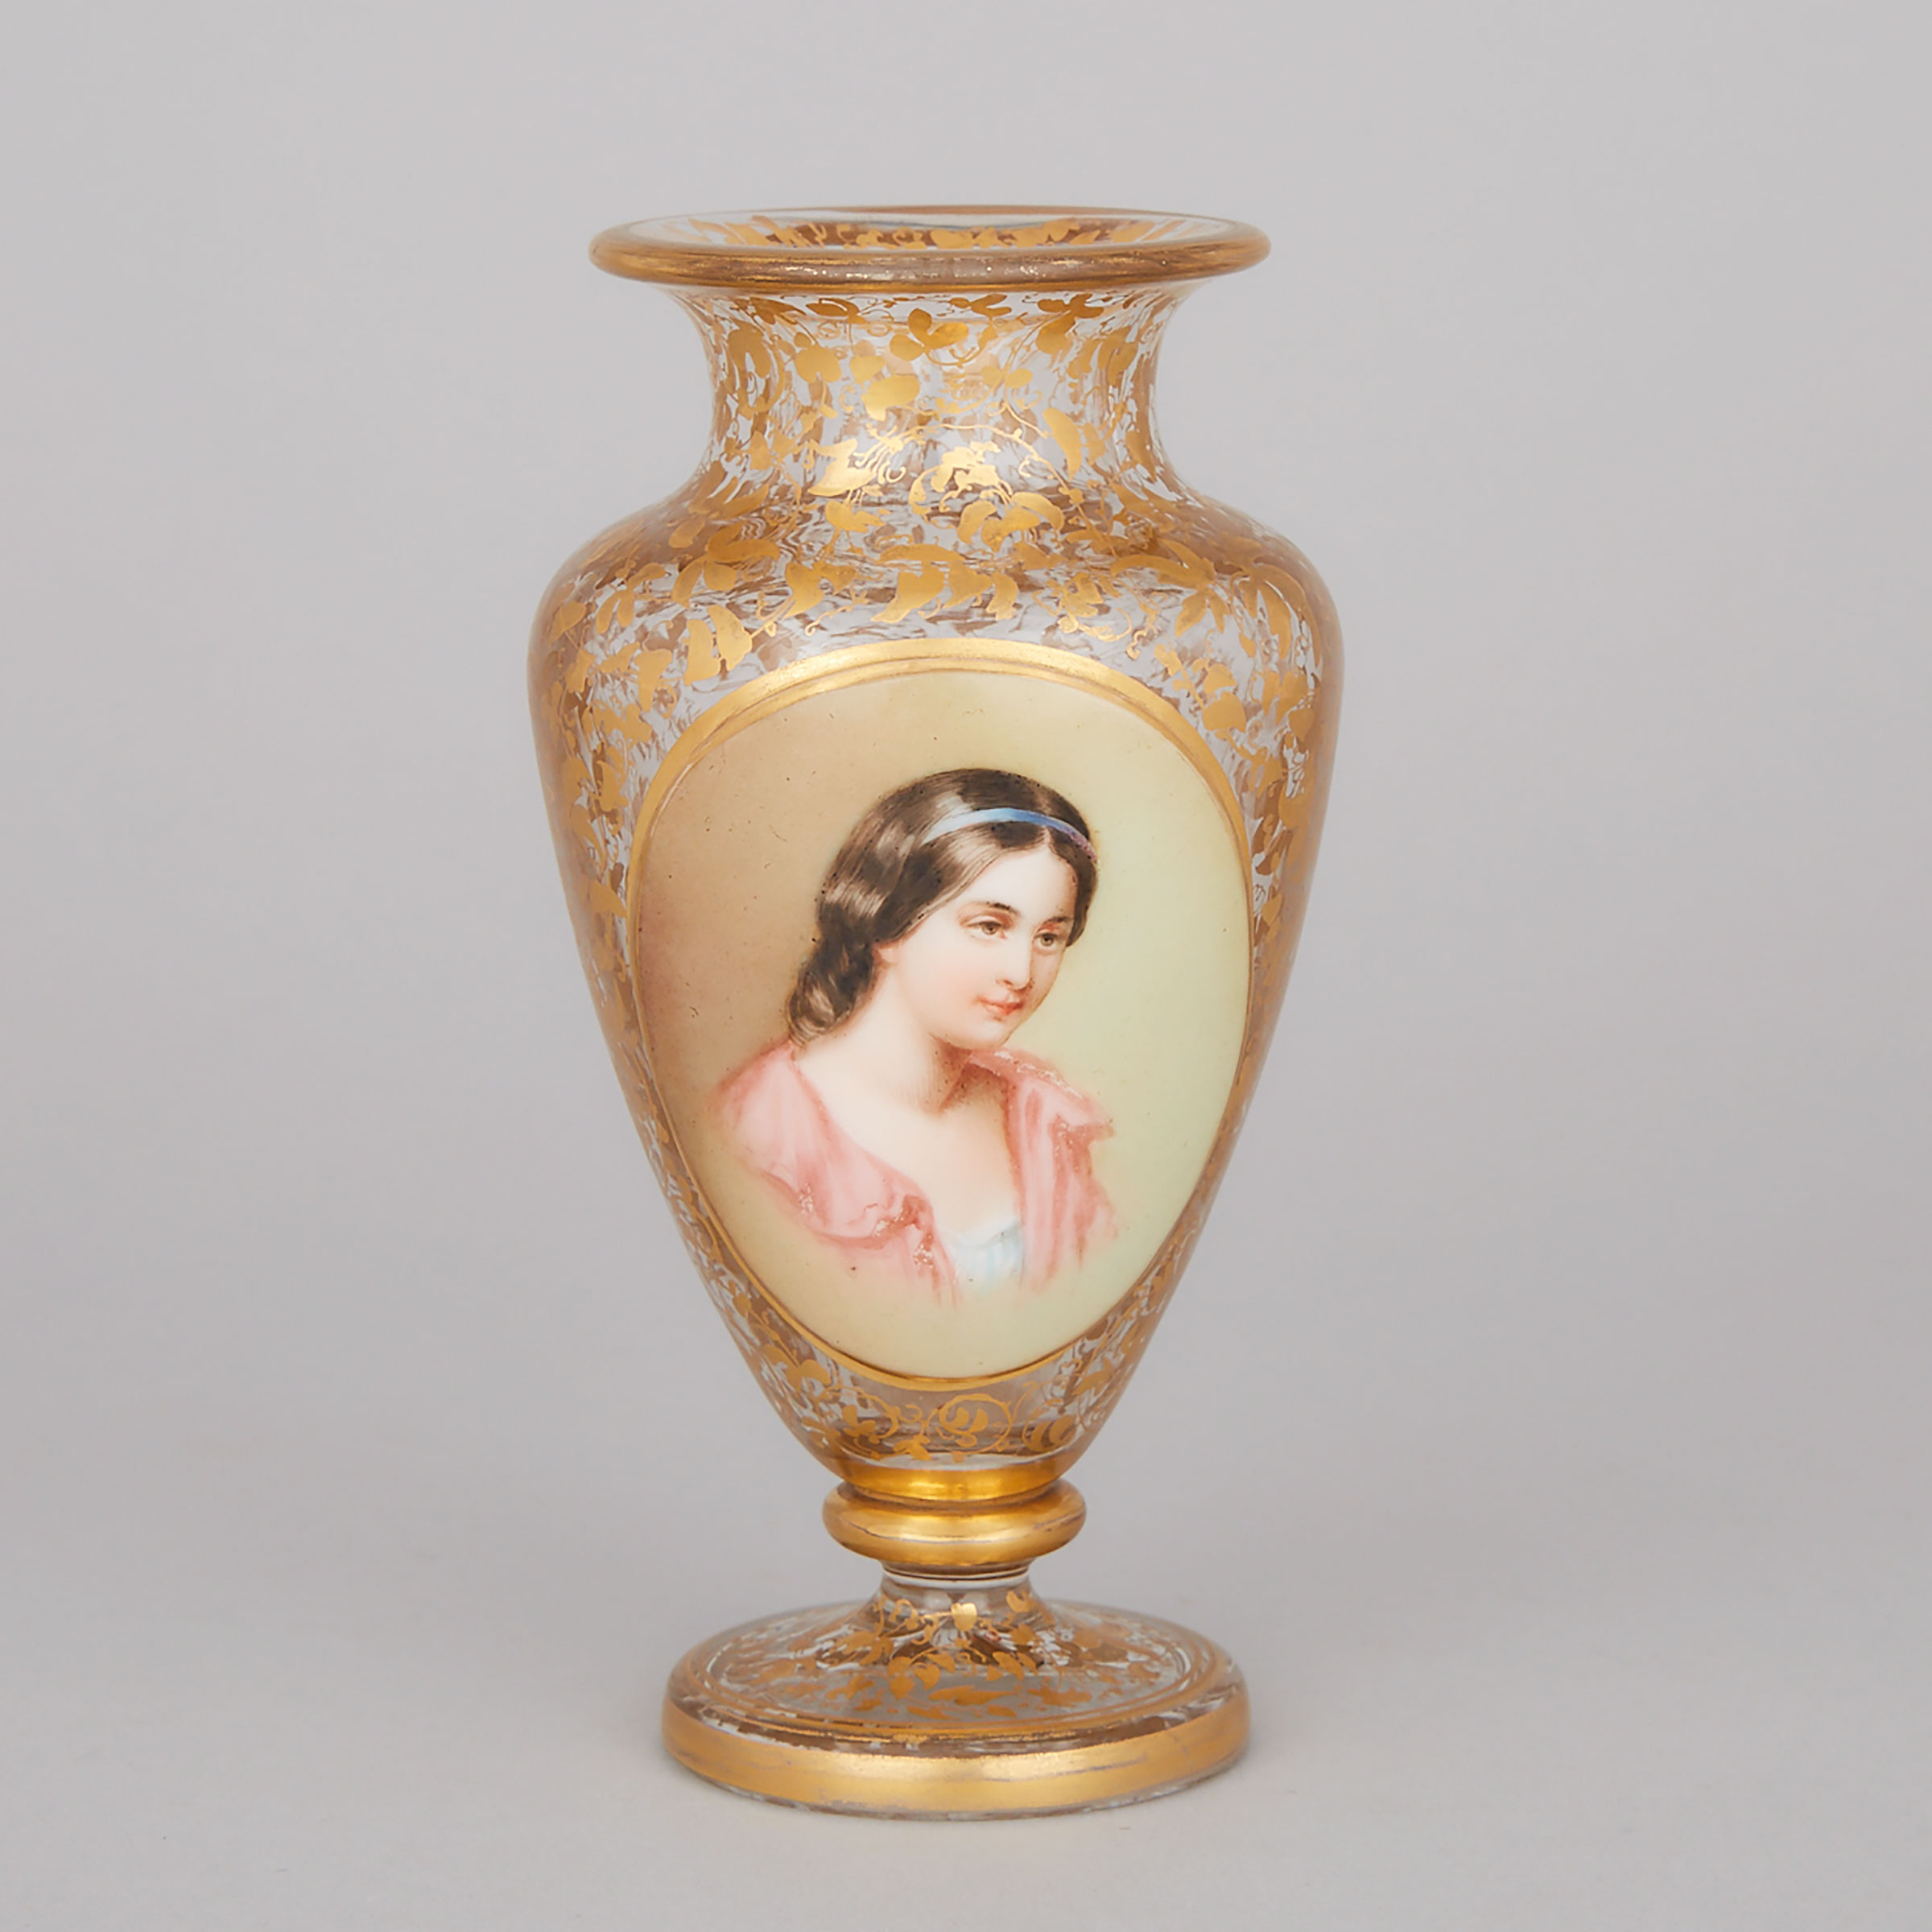 Bohemian Overlaid, Enameled and Gilt Glass Portrait Vase, late 19th century